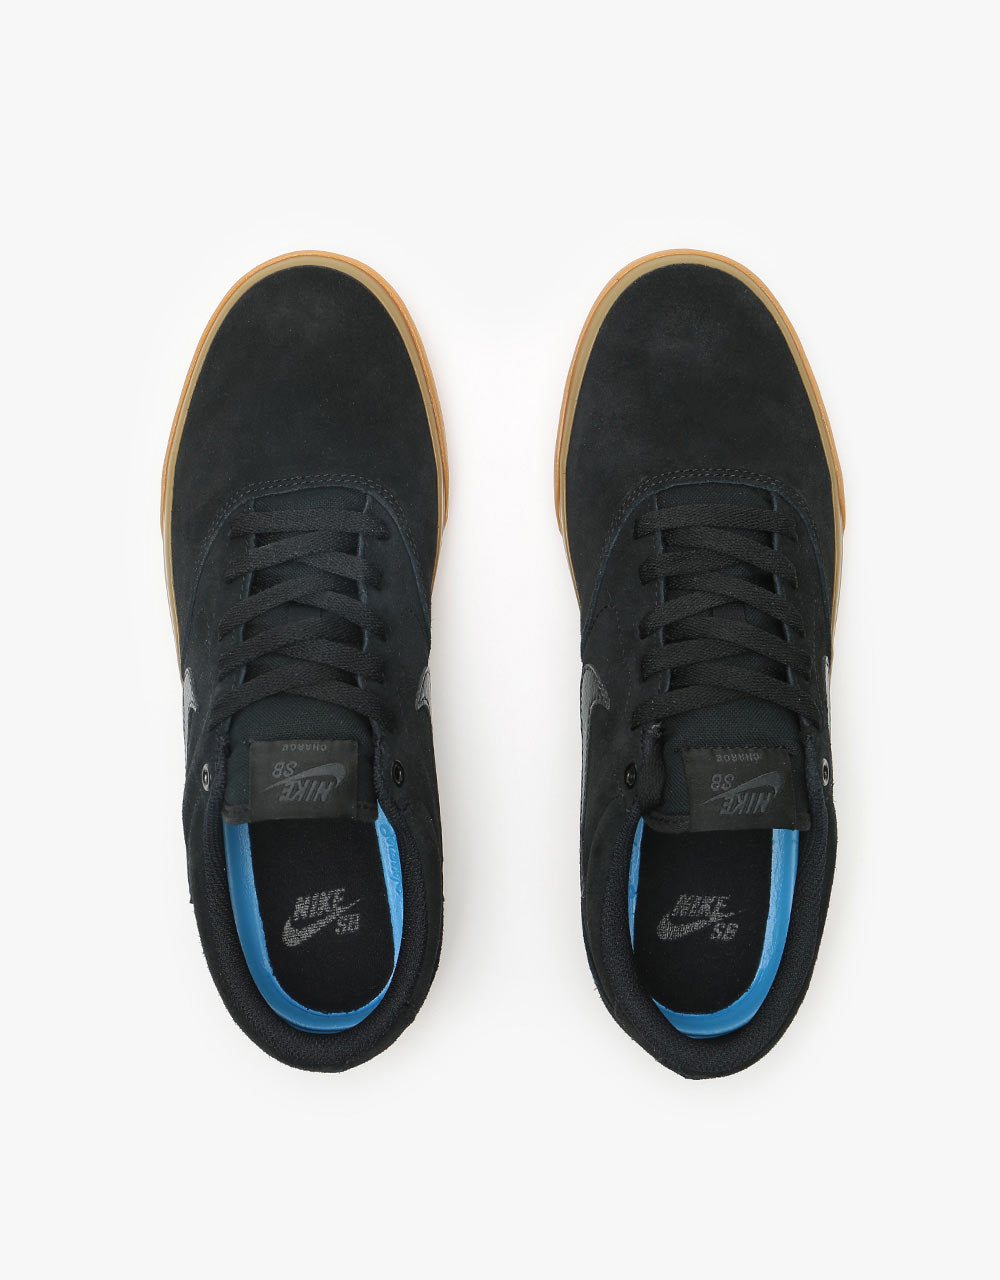 Nike SB Charge Suede Skate Shoes - Black/Anthracite-Black-Gum Light Brown